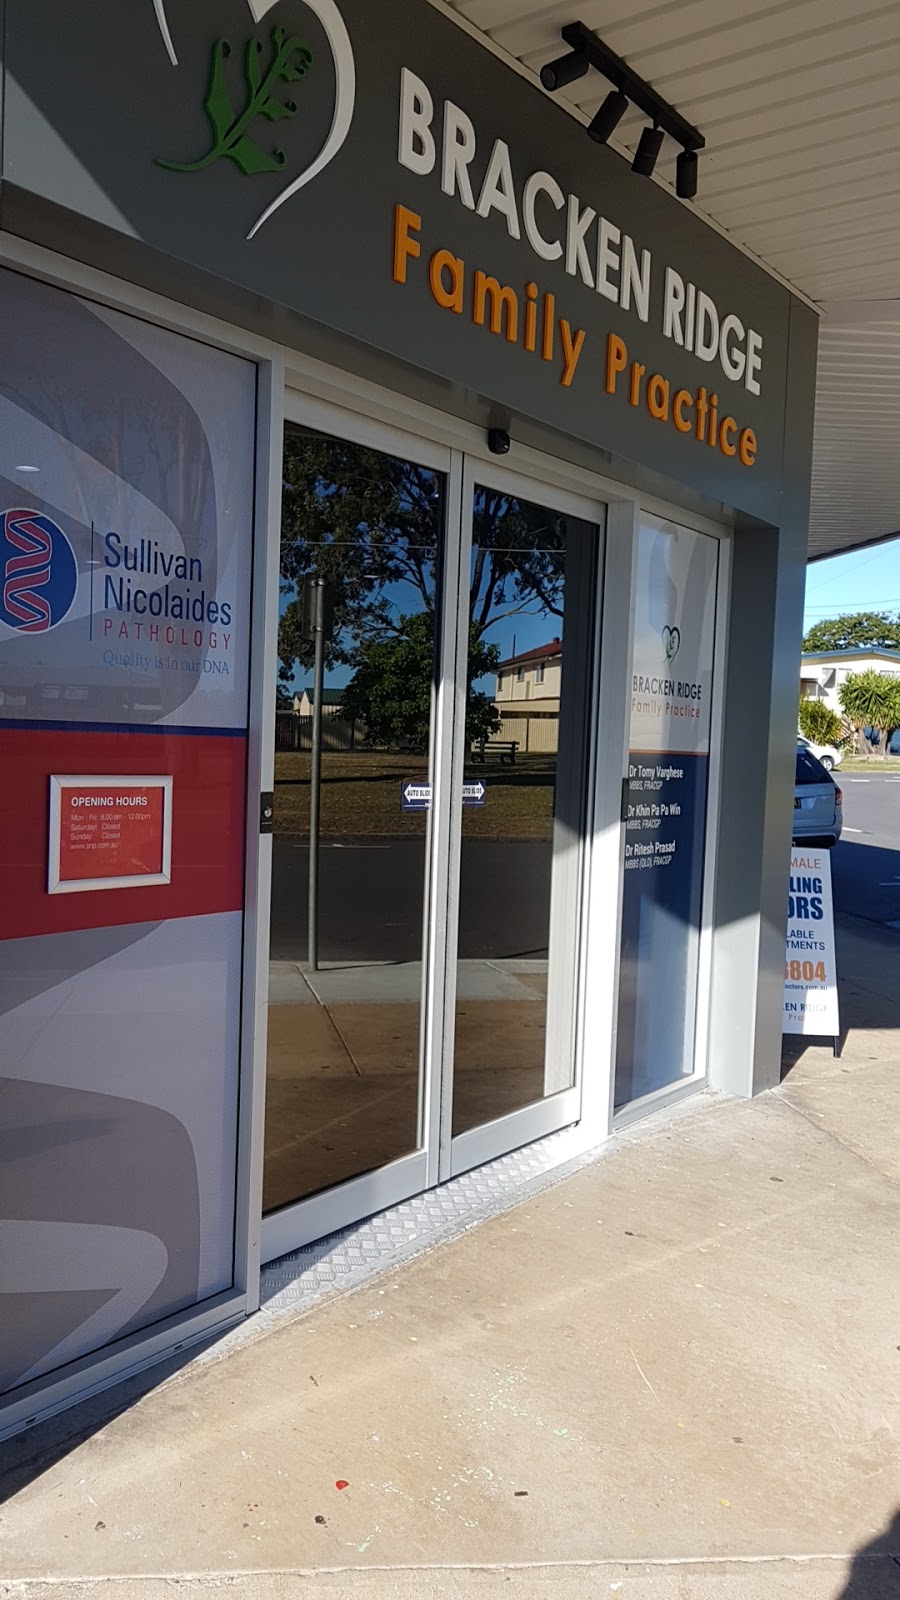 Bracken Ridge Family Practice | Shop1/81 Gawain Rd, Bracken Ridge QLD 4017, Australia | Phone: (07) 3261 8804